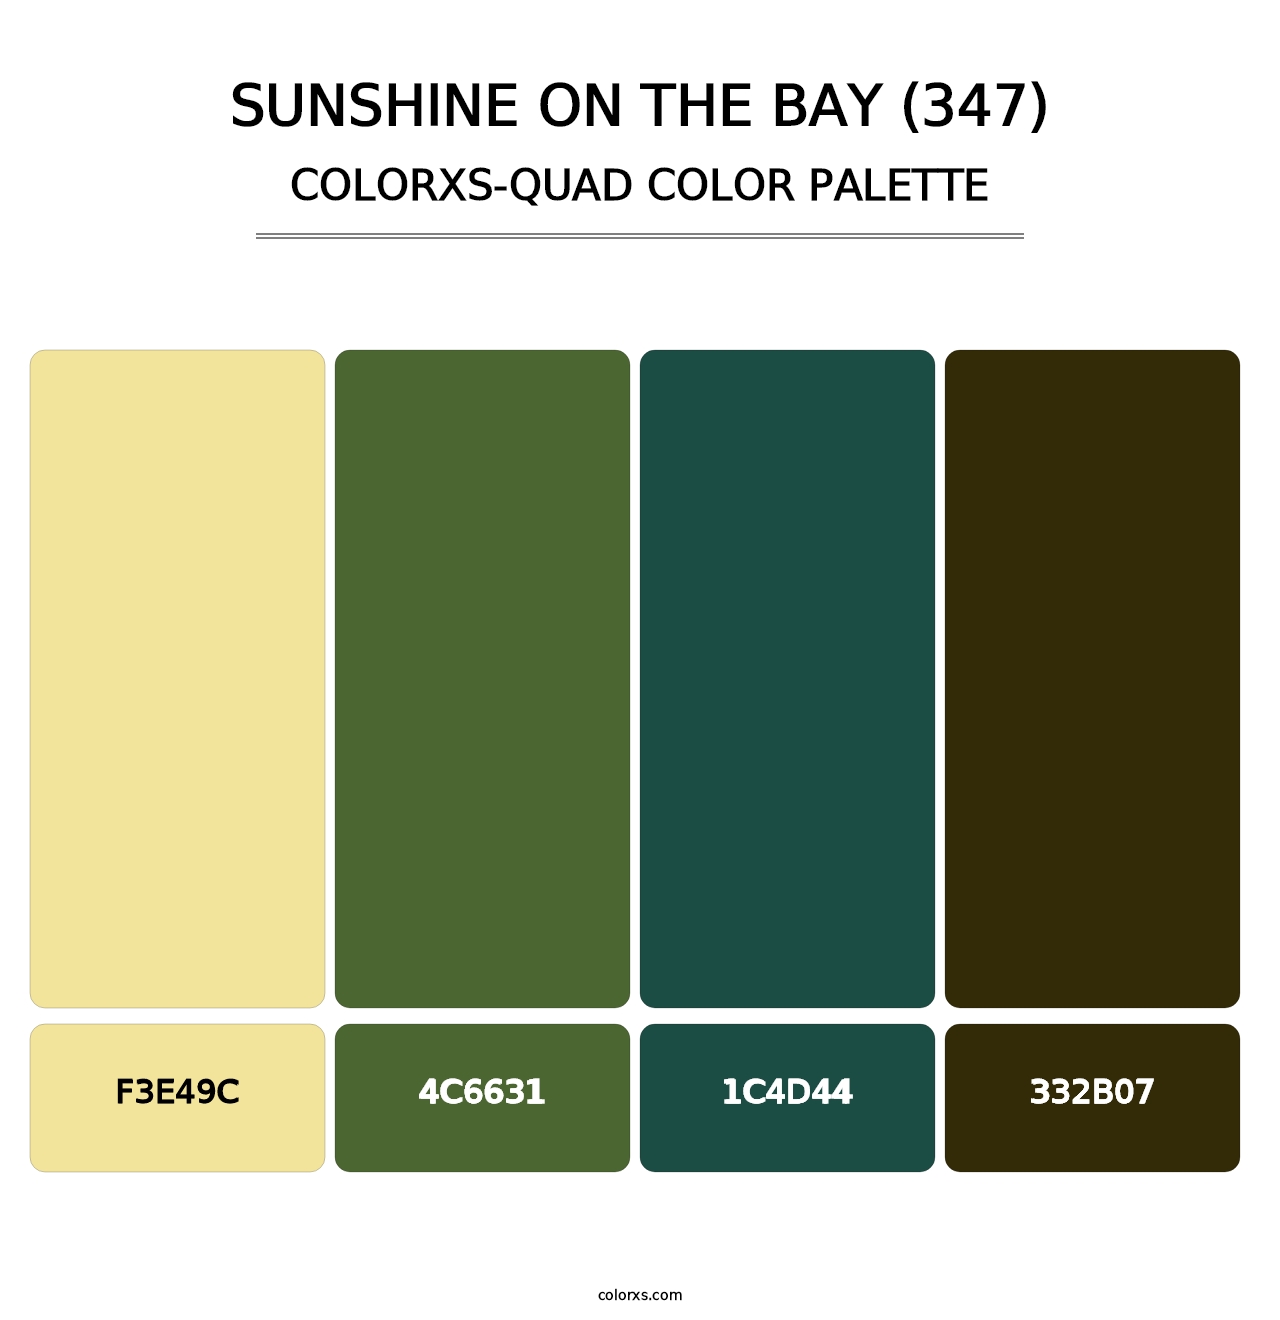 Sunshine on the Bay (347) - Colorxs Quad Palette